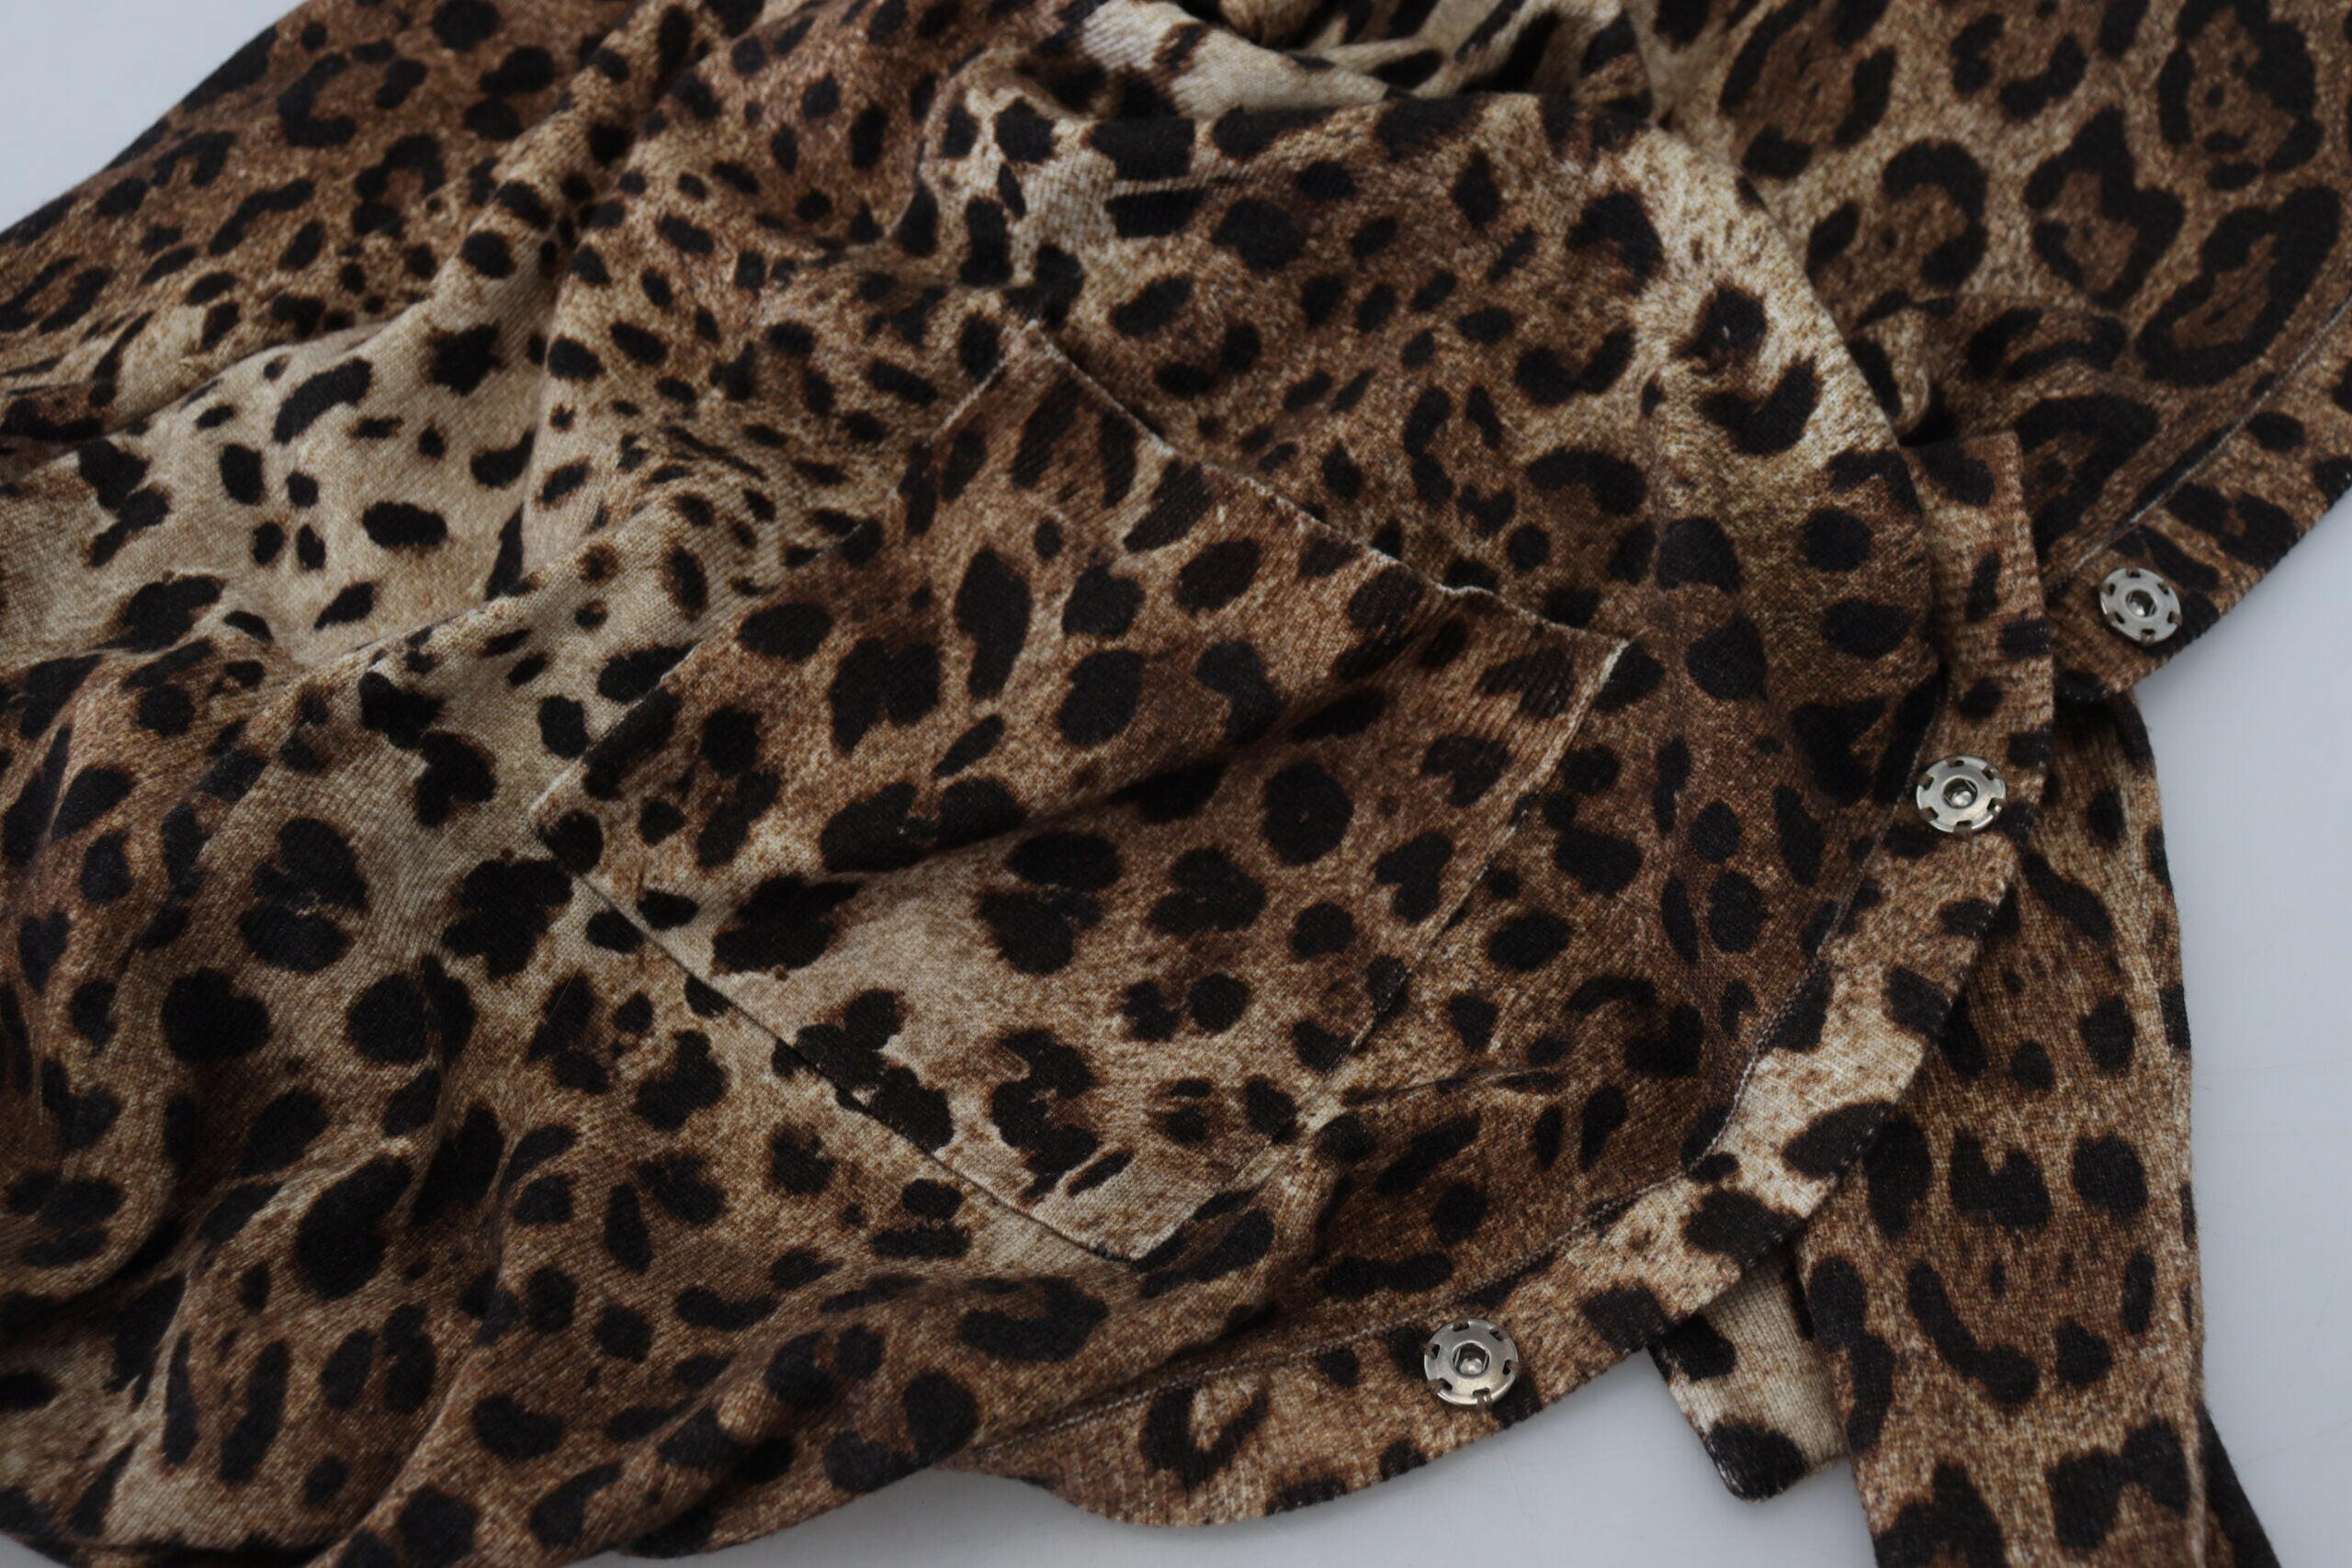 Dolce & Gabbana Brown Leopard Wool Robe Cardigan Sweater - GENUINE AUTHENTIC BRAND LLC  